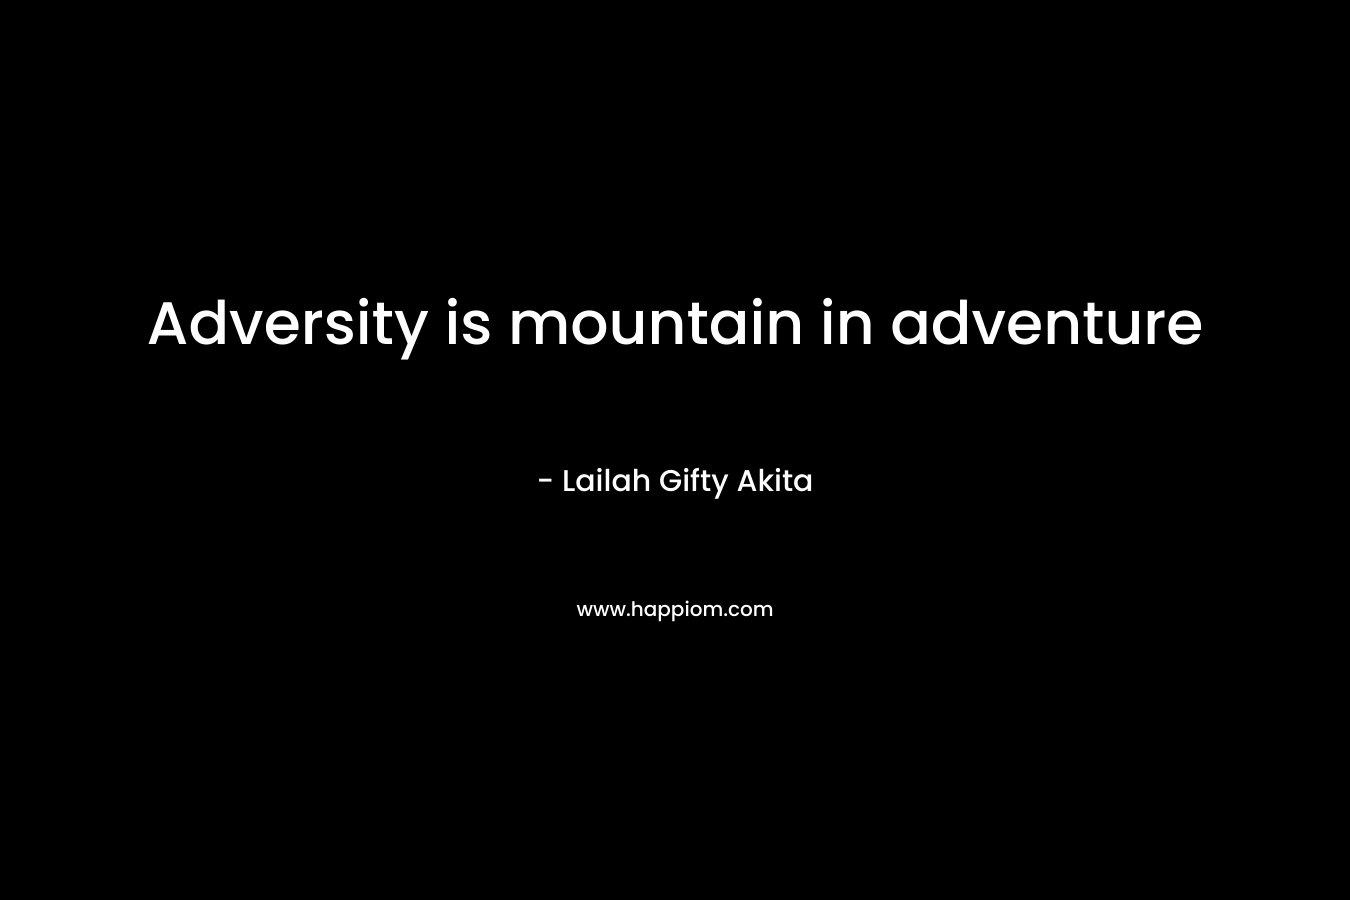 Adversity is mountain in adventure